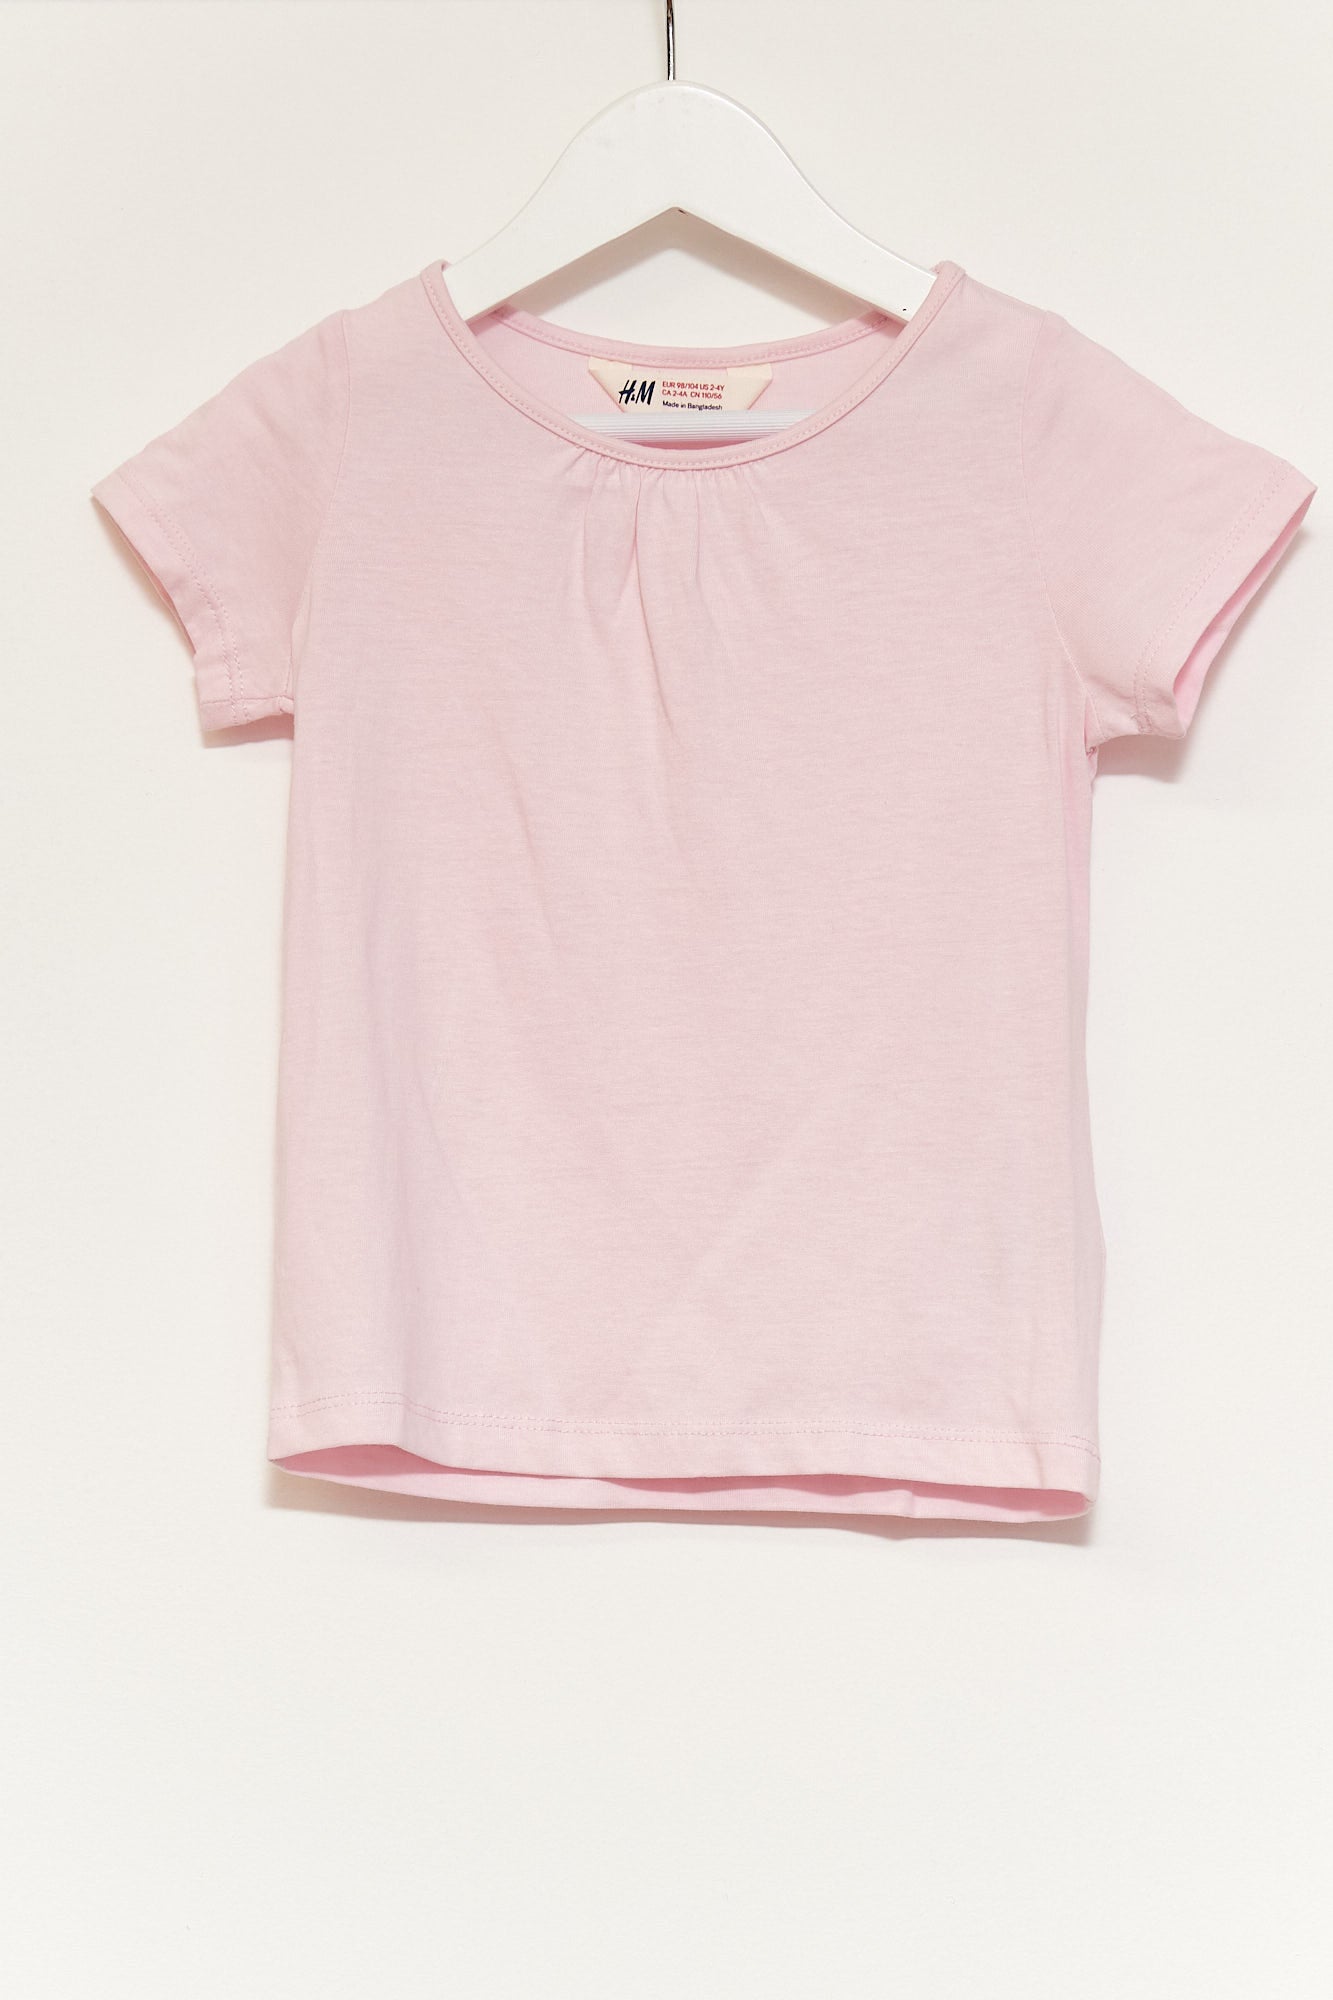 Kids H&M Light Pink T-shirt age 4